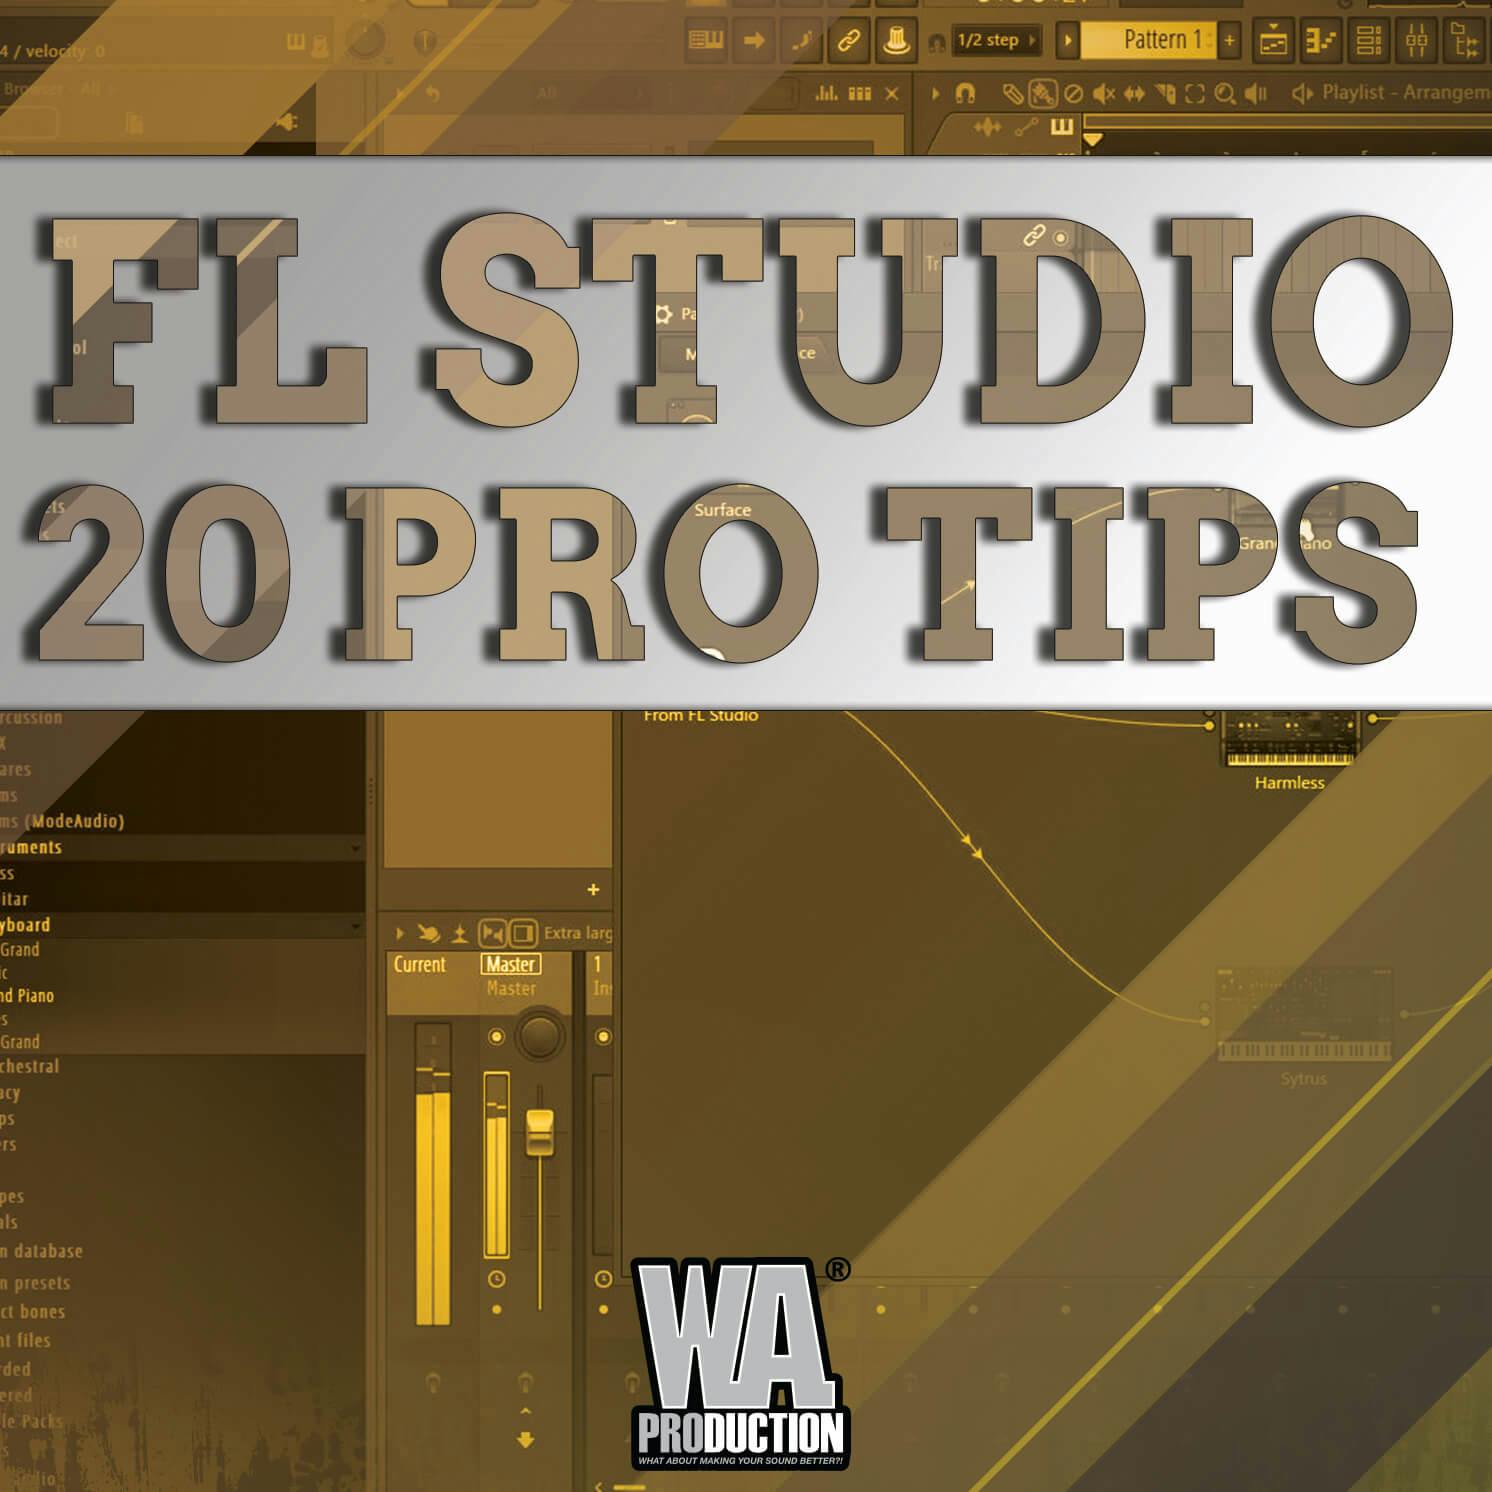 FL Studio Pro